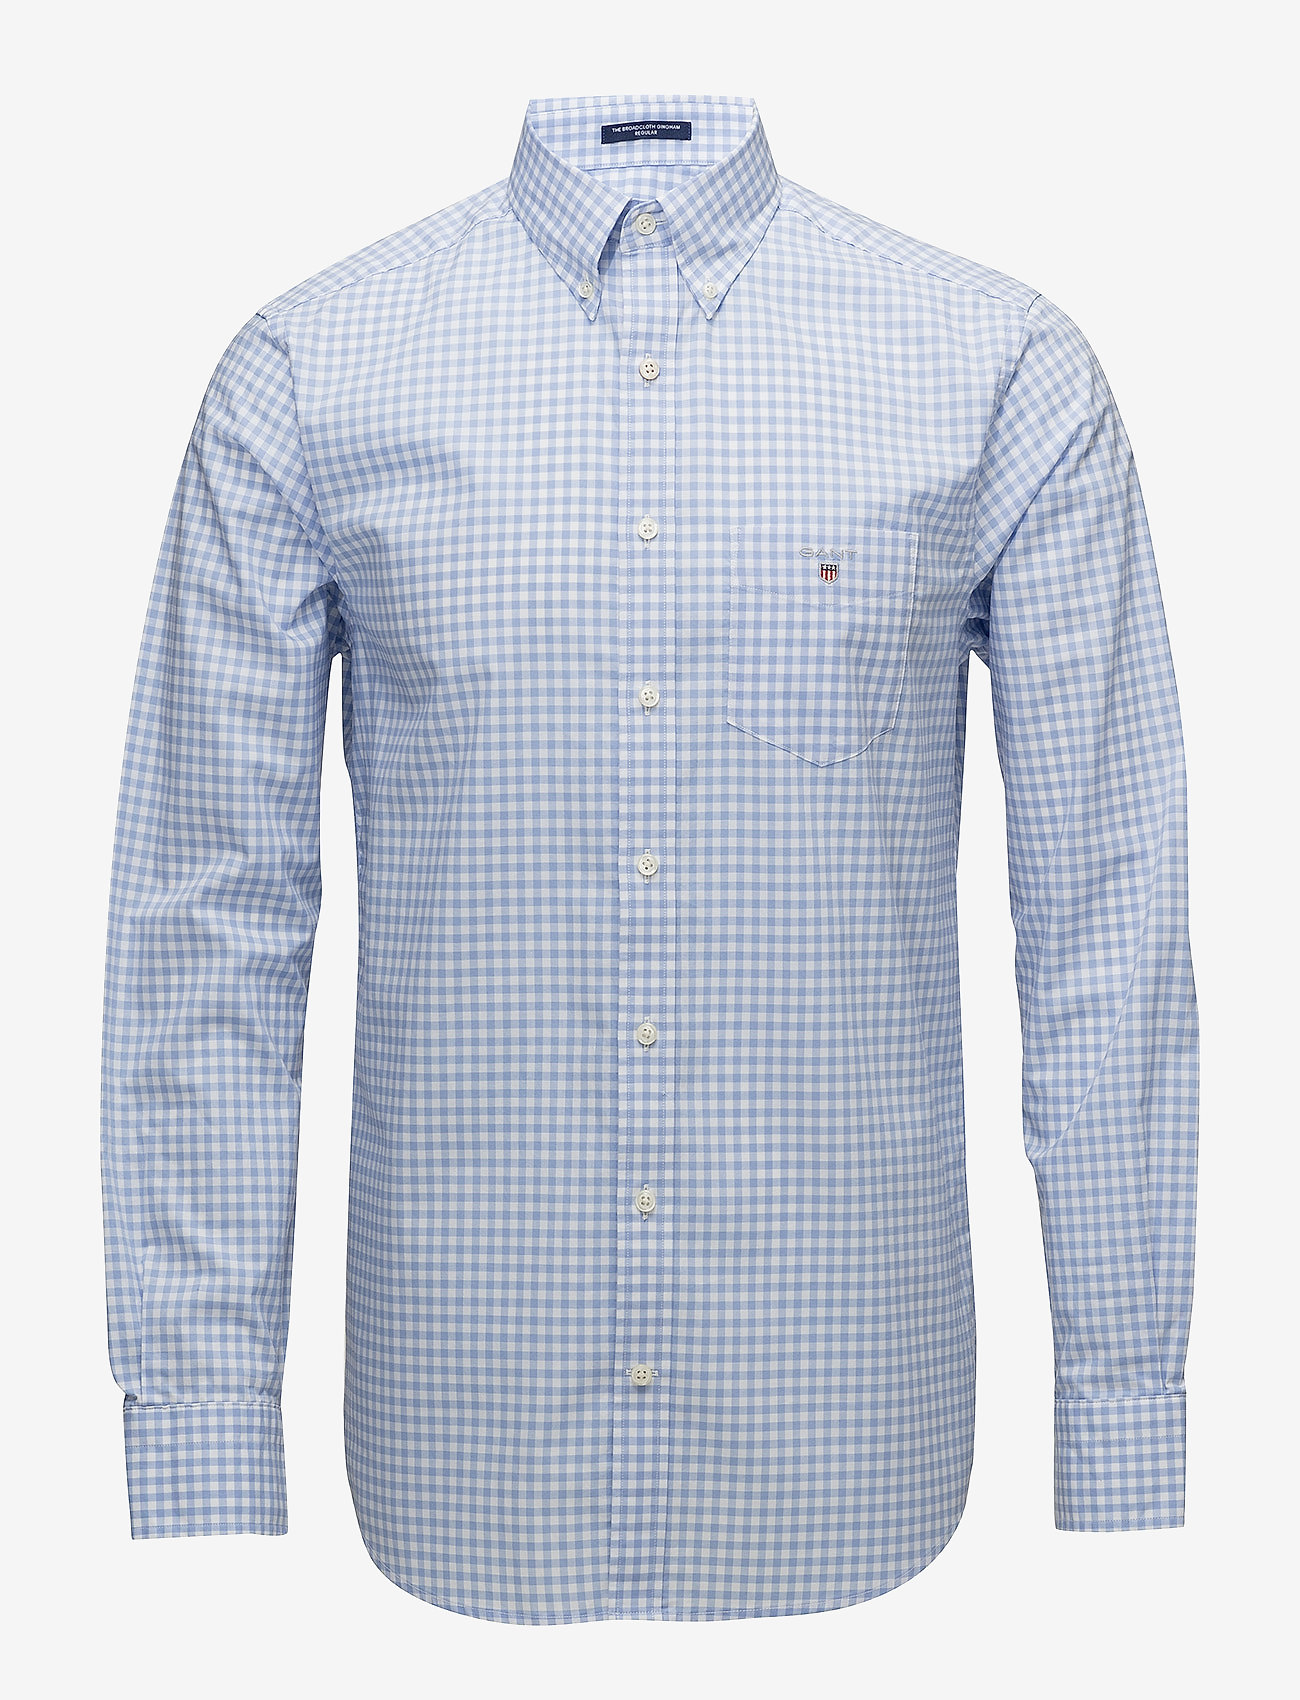 GANT - REG BROADCLOTH GINGHAM BD - checkered shirts - capri blue - 0